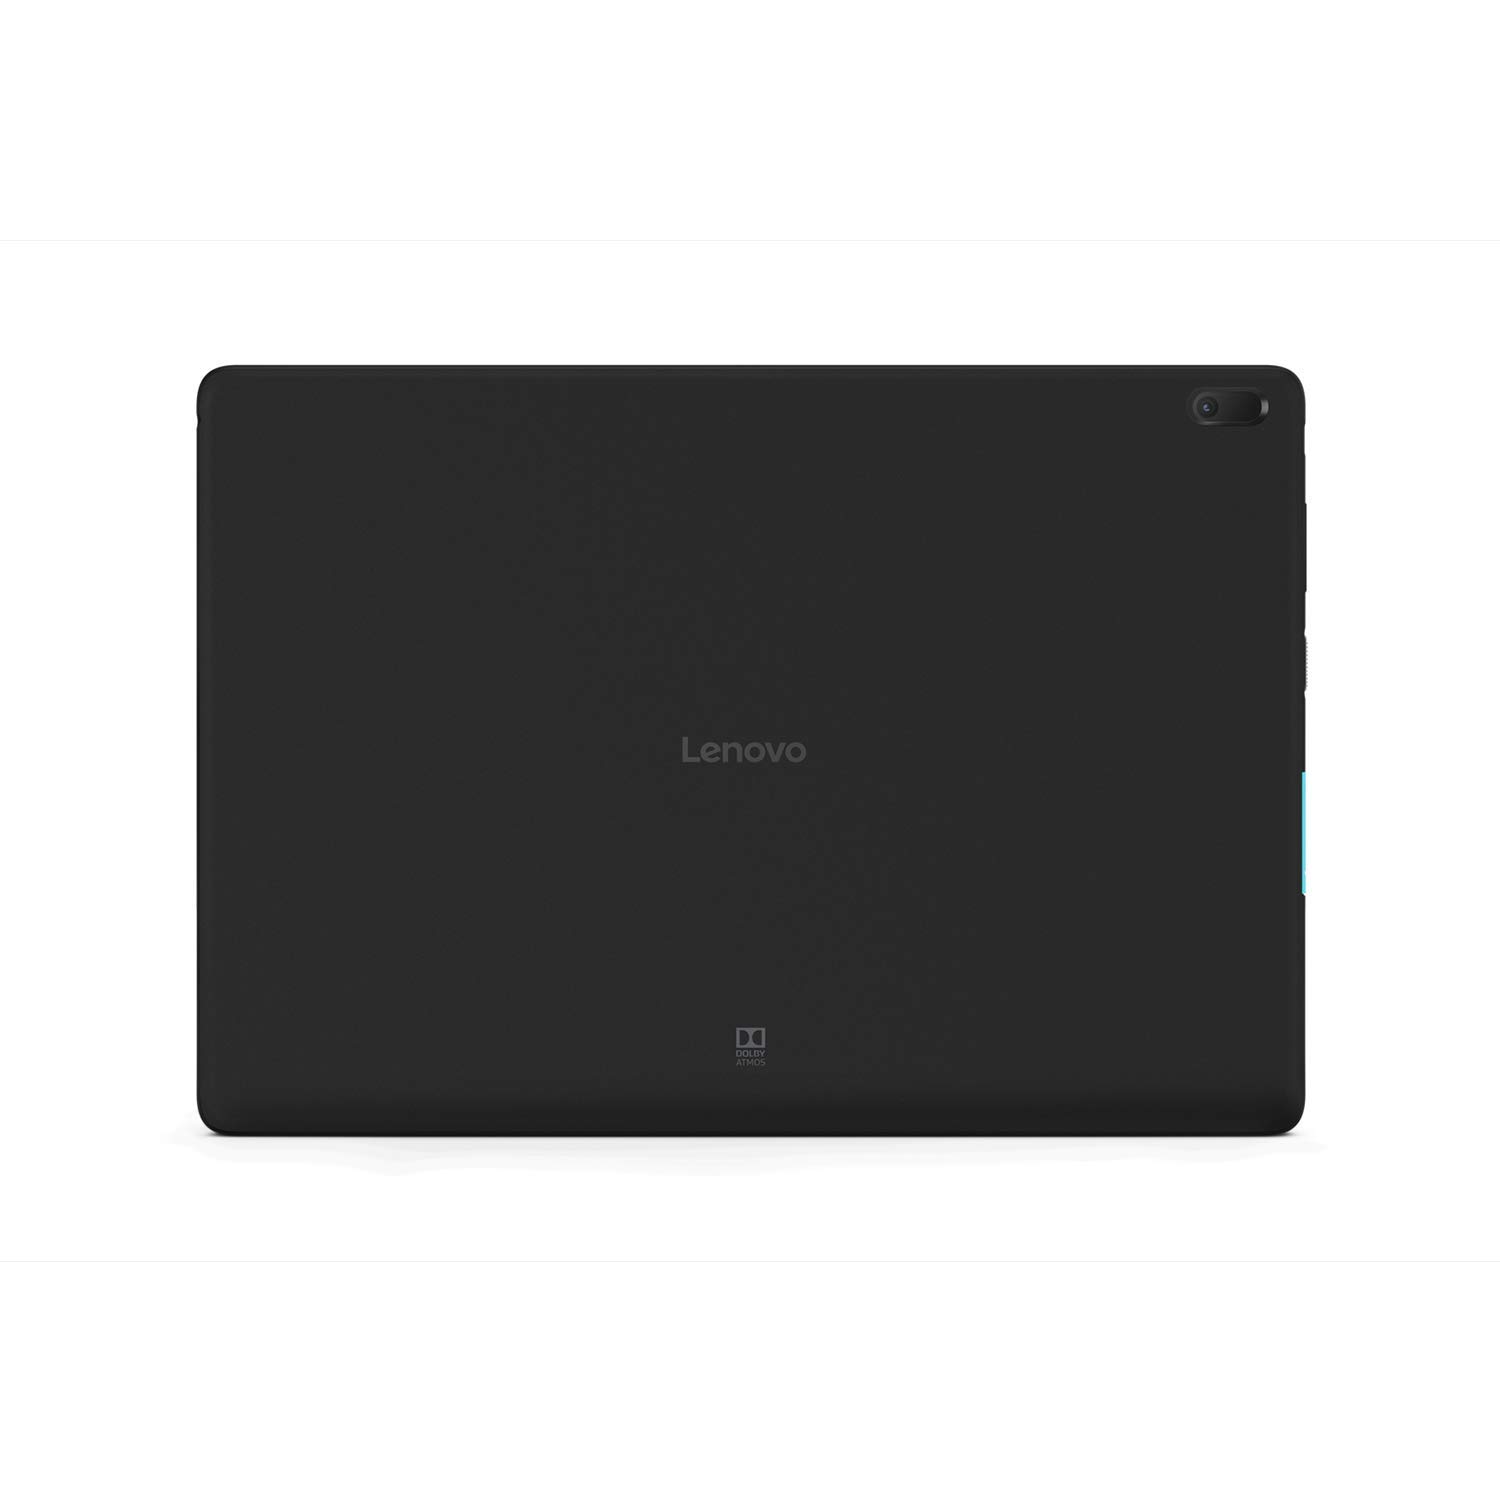 Lenovo Tab E 10 1" Android Tablet 2GB